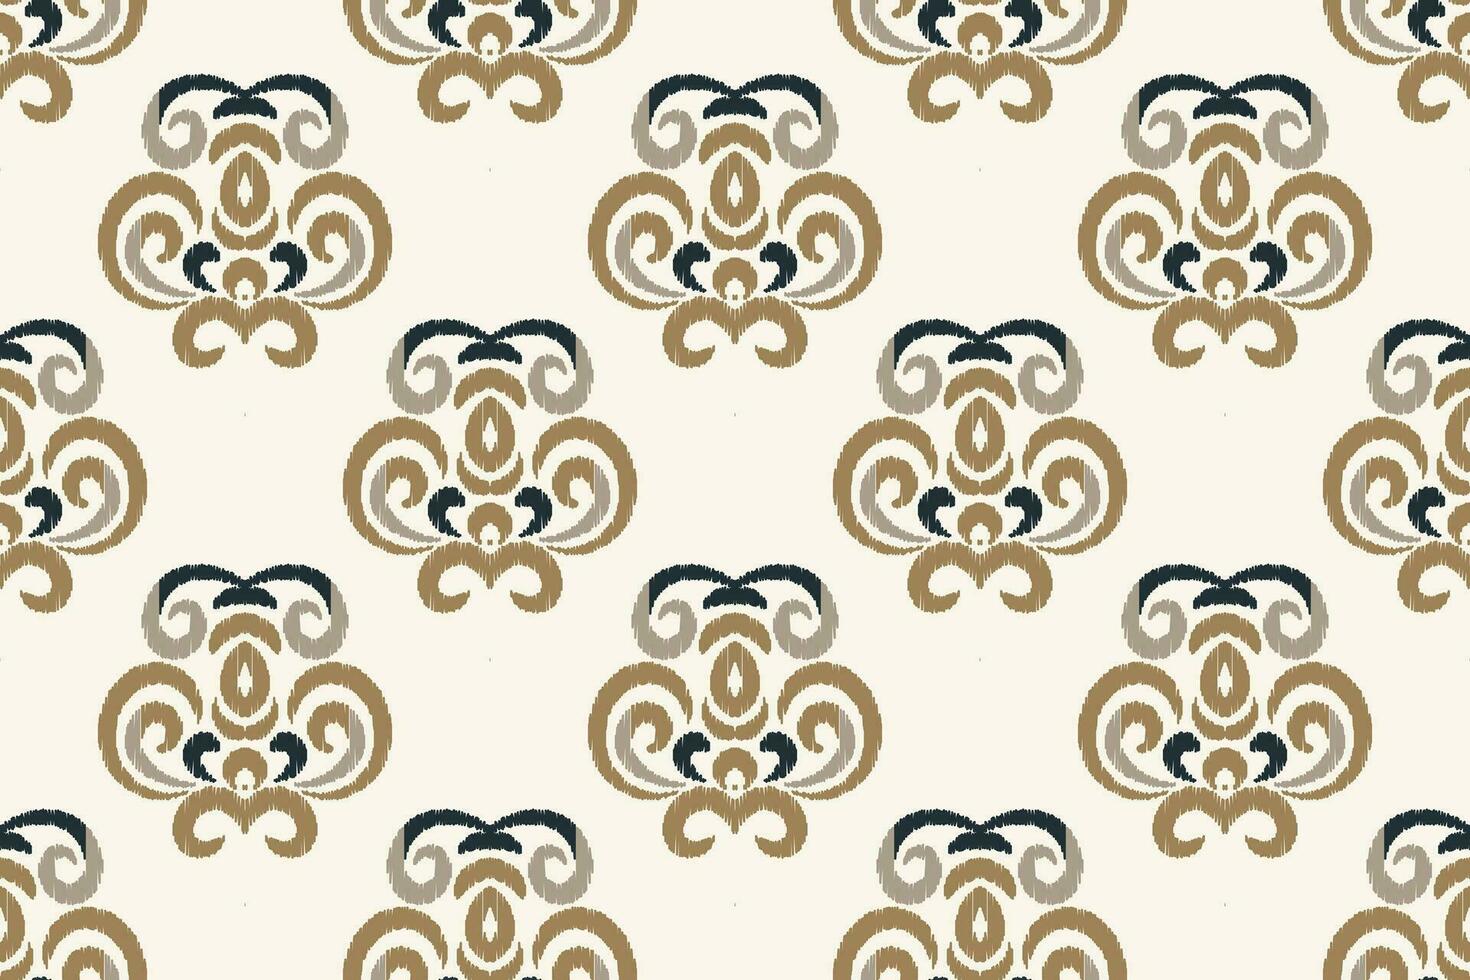 ikat floral cachemir bordado antecedentes. ikat modelo geométrico étnico oriental modelo tradicional. ikat azteca estilo resumen diseño para impresión textura,tela,sari,sari,alfombra. vector